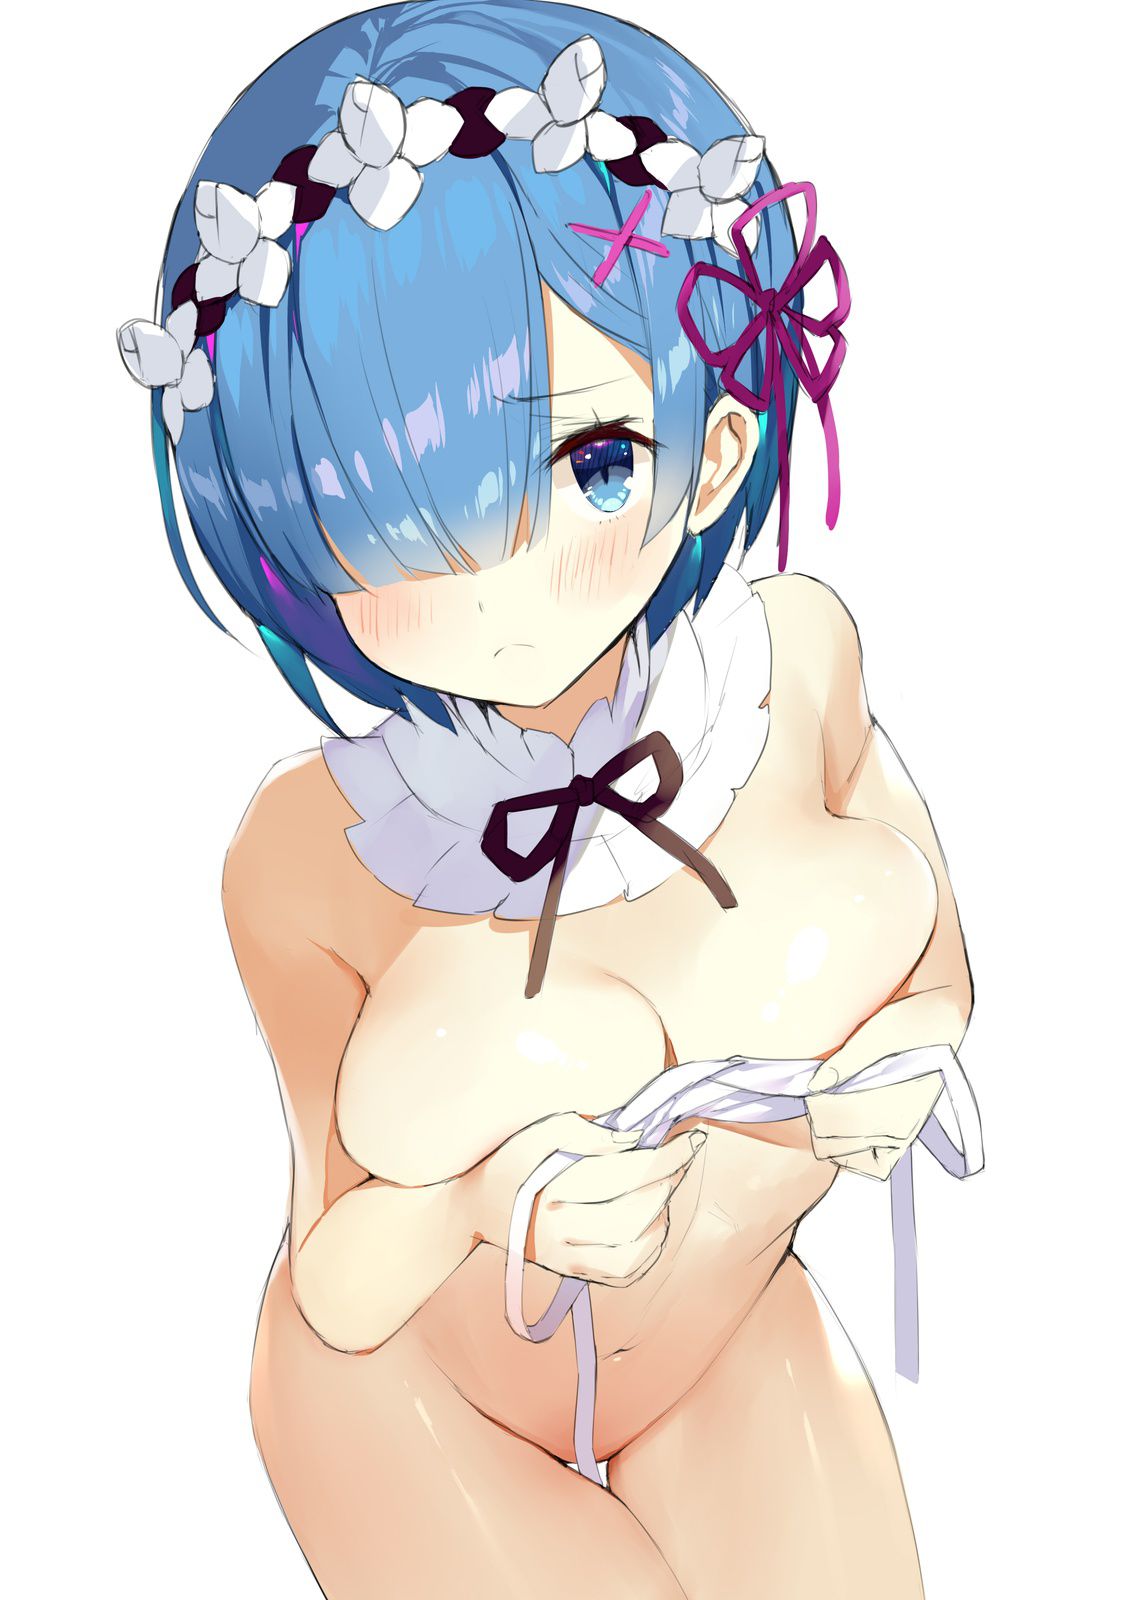 [Rezero] erotic image of sister REM Part 12 30